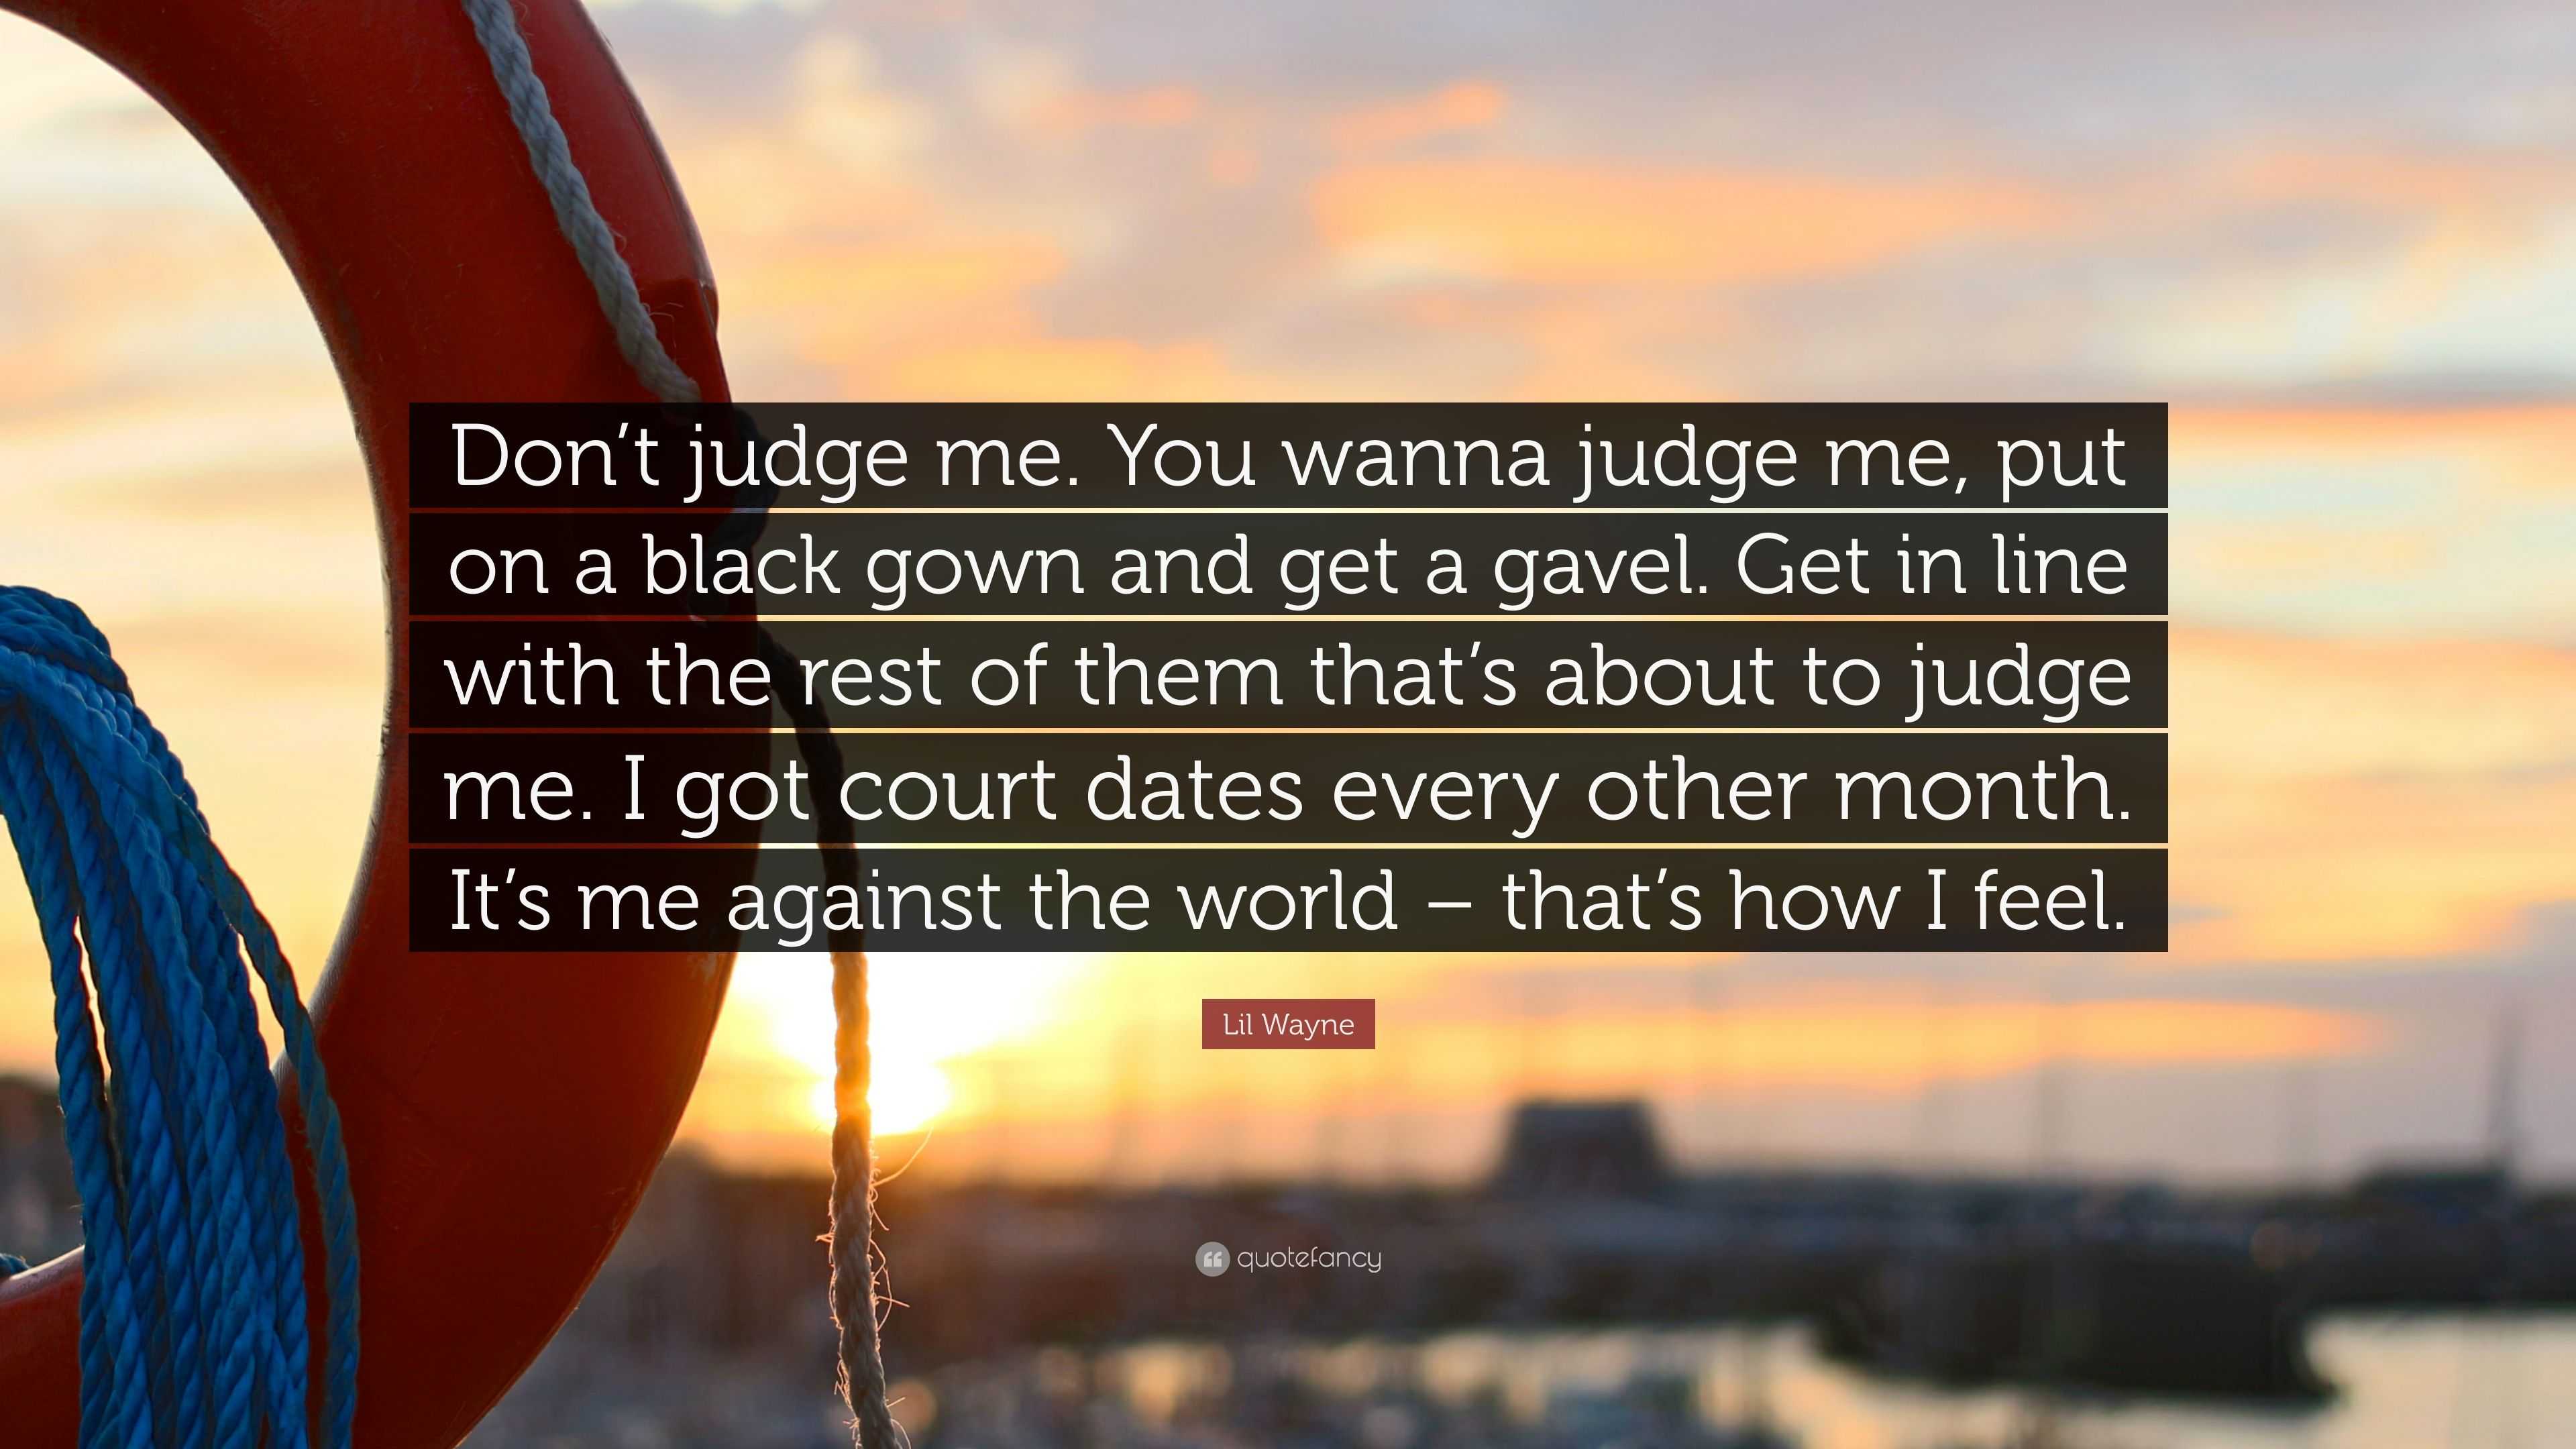 Lil Wayne Quote “Don t judge me You wanna judge me